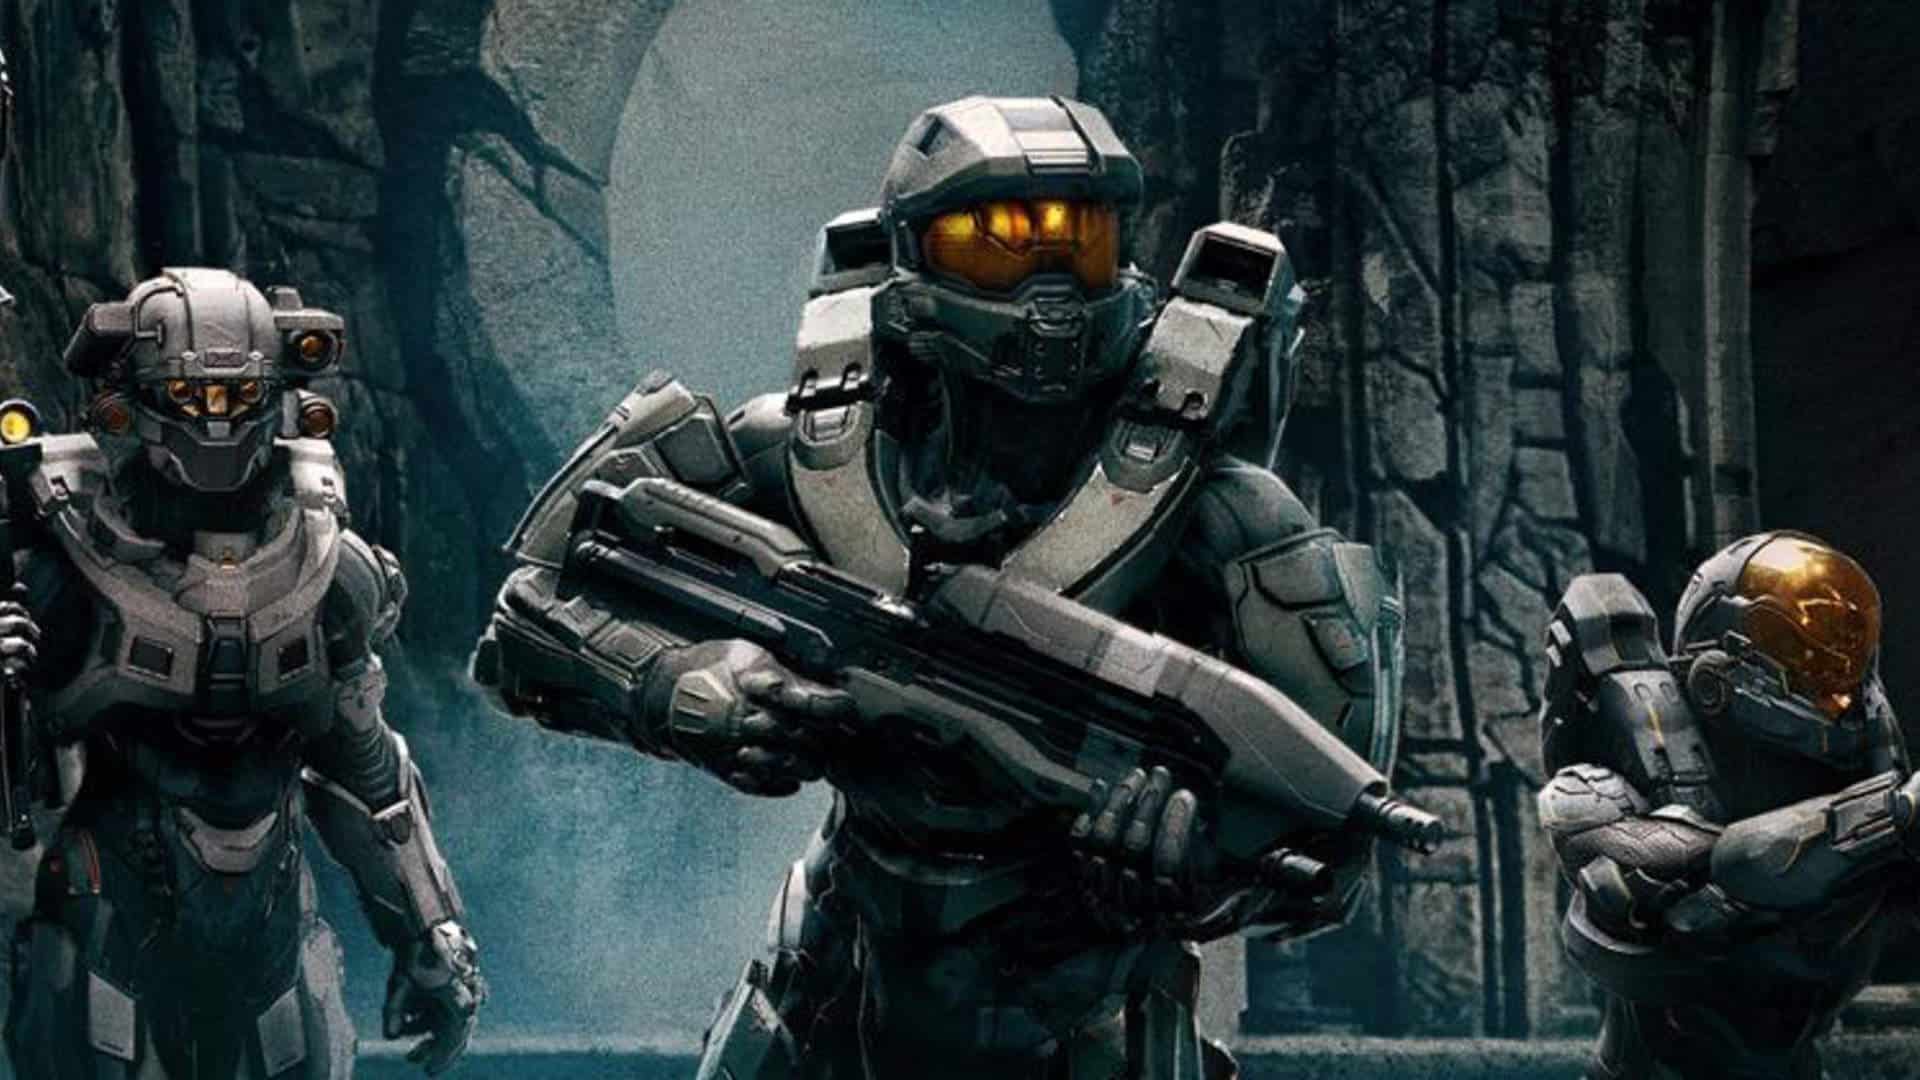 Halo 5: Guardians 343 Industries is a Halo formula failure